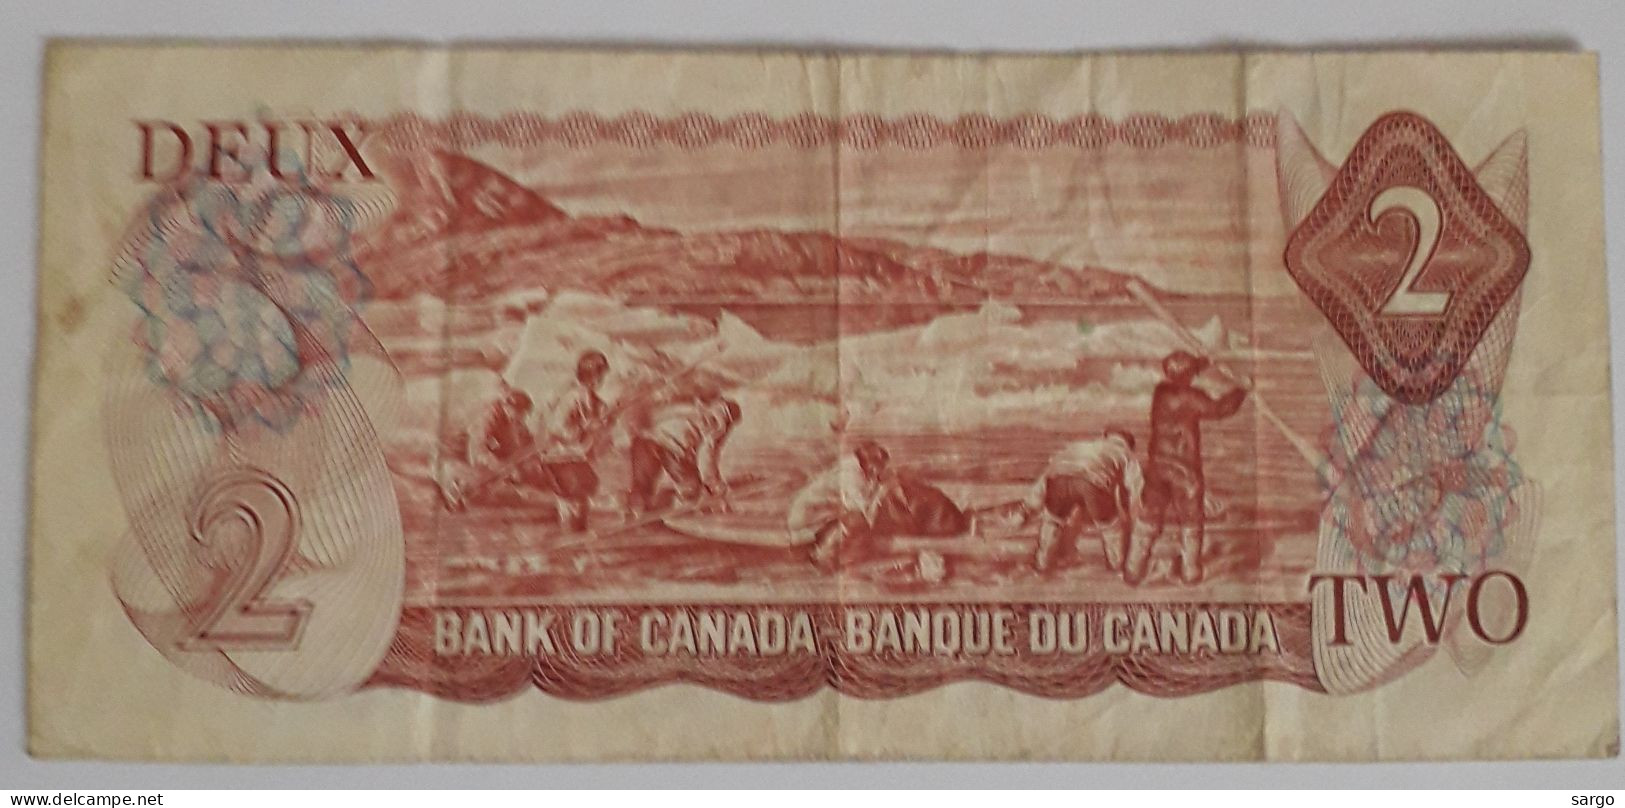 CANADA - 2 DOLLARS - 1974 - CIRC - P 86 - BANKNOTES - PAPER MONEY - CARTAMONETA - - Canada